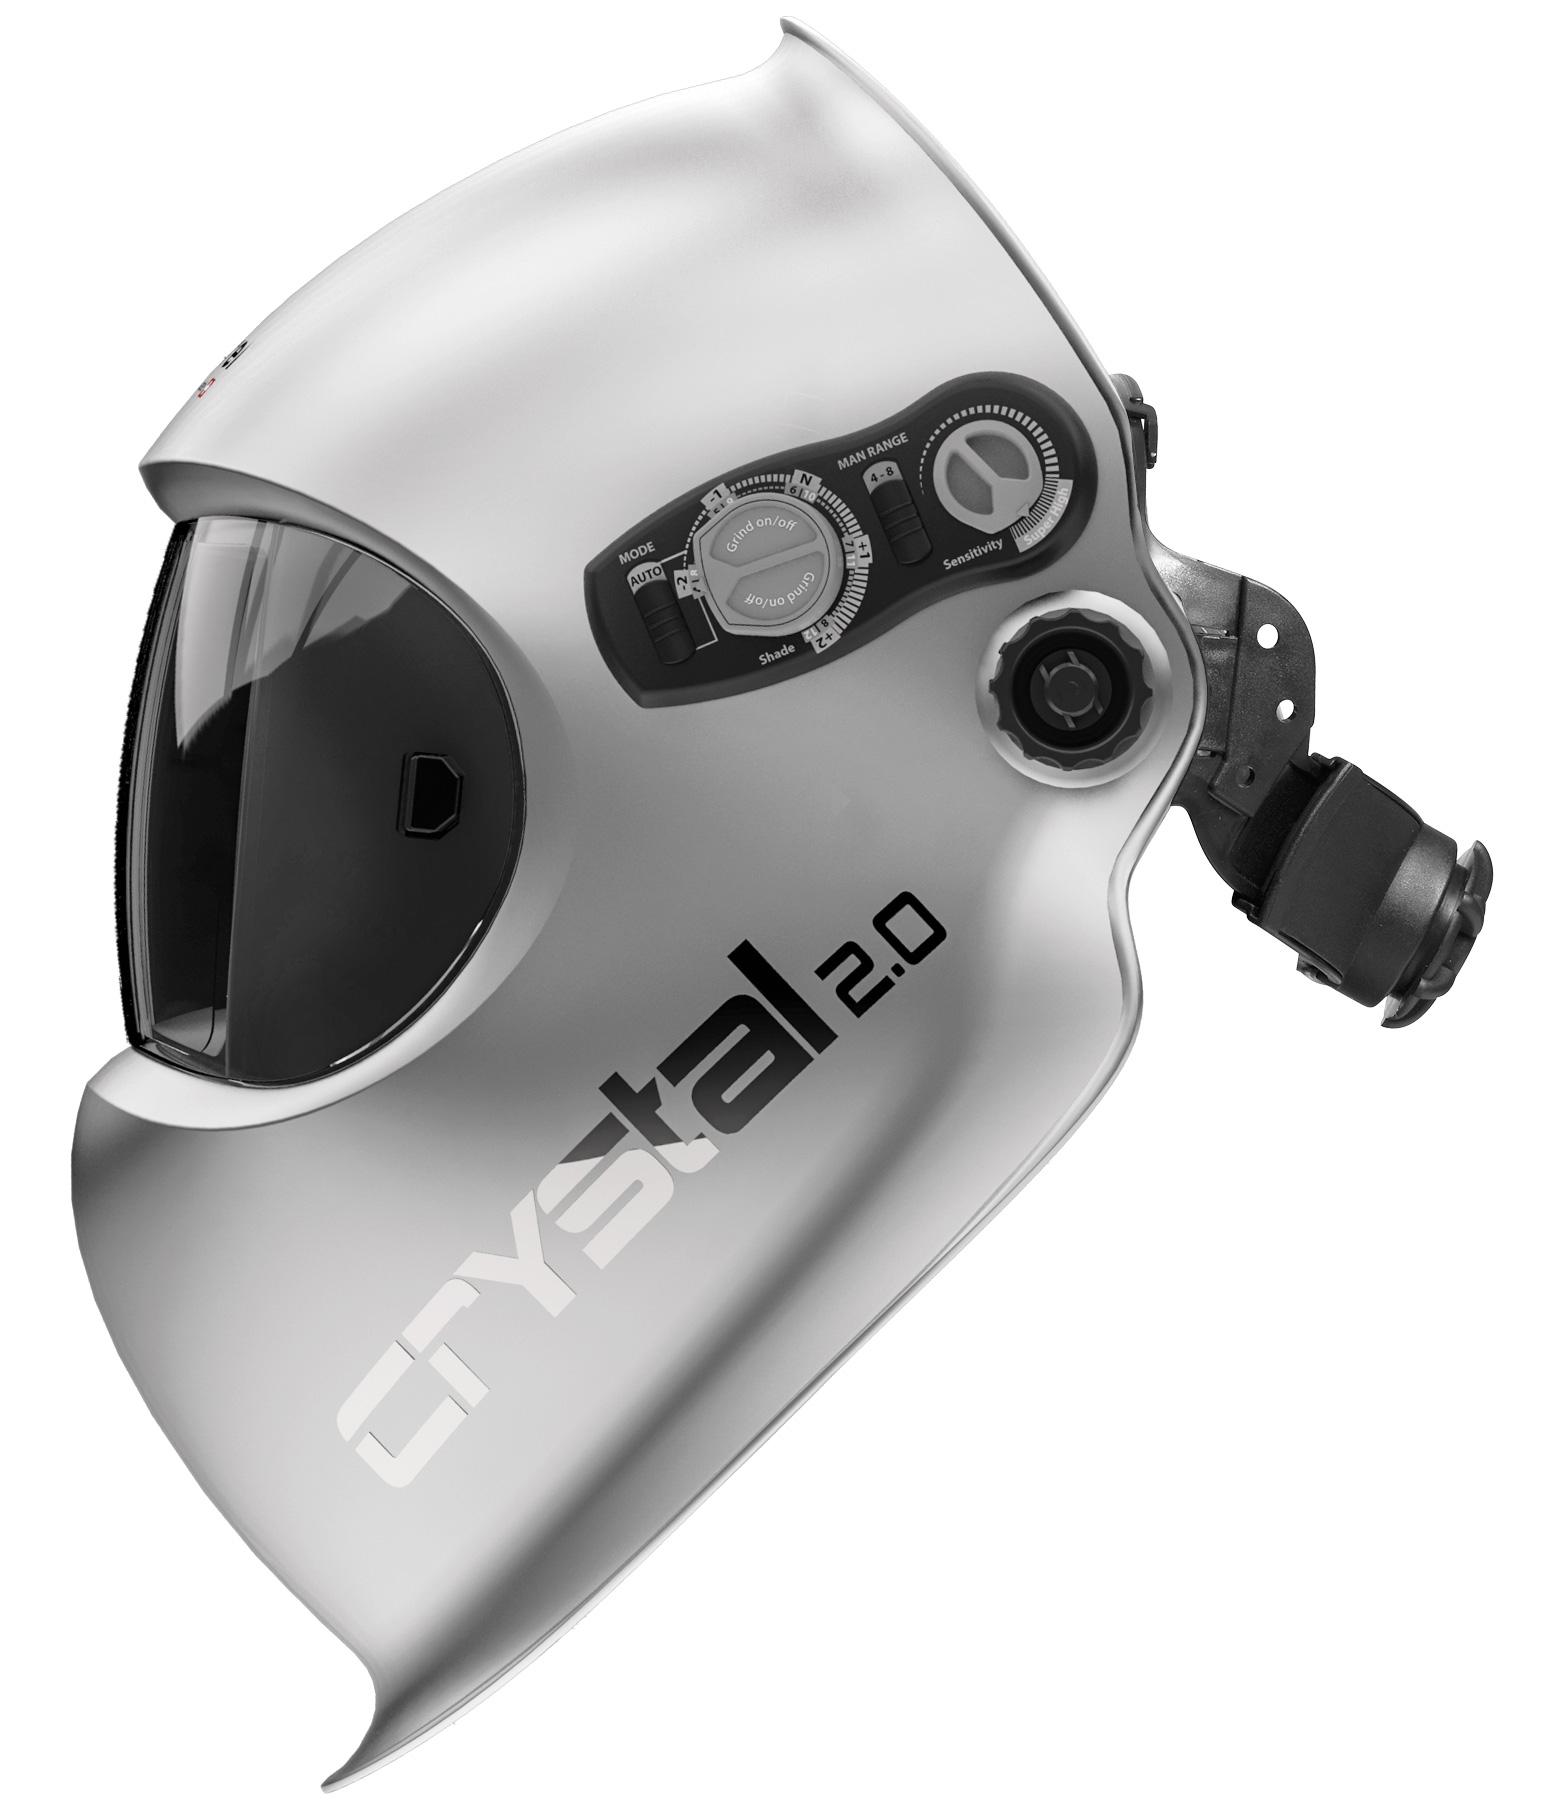 1006.900  Optrel Crystal 2.0 Silver Auto Darkening Welding Helmet, Shade 4 - 12